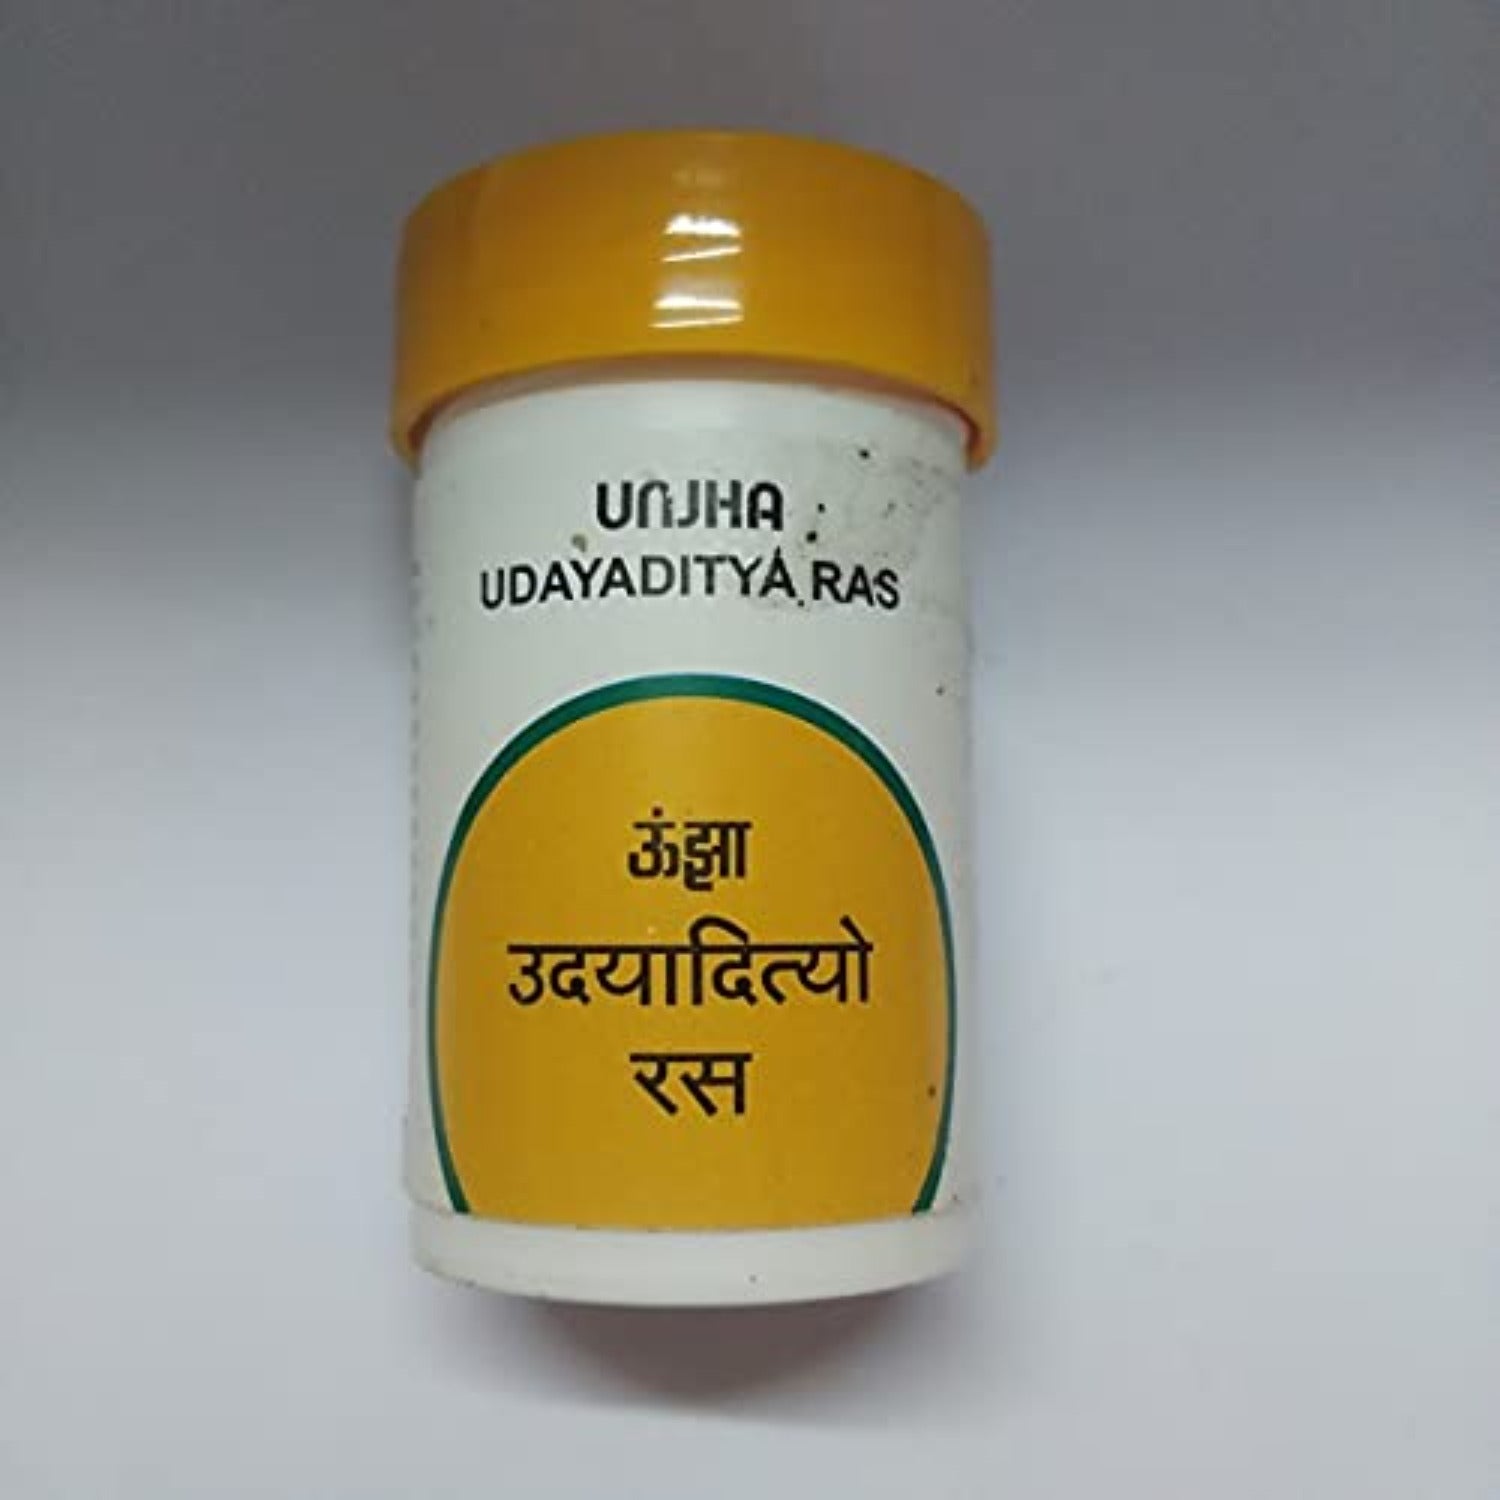 Unjha Ayurvedic Udayaditya Ras Skin Health Tablets